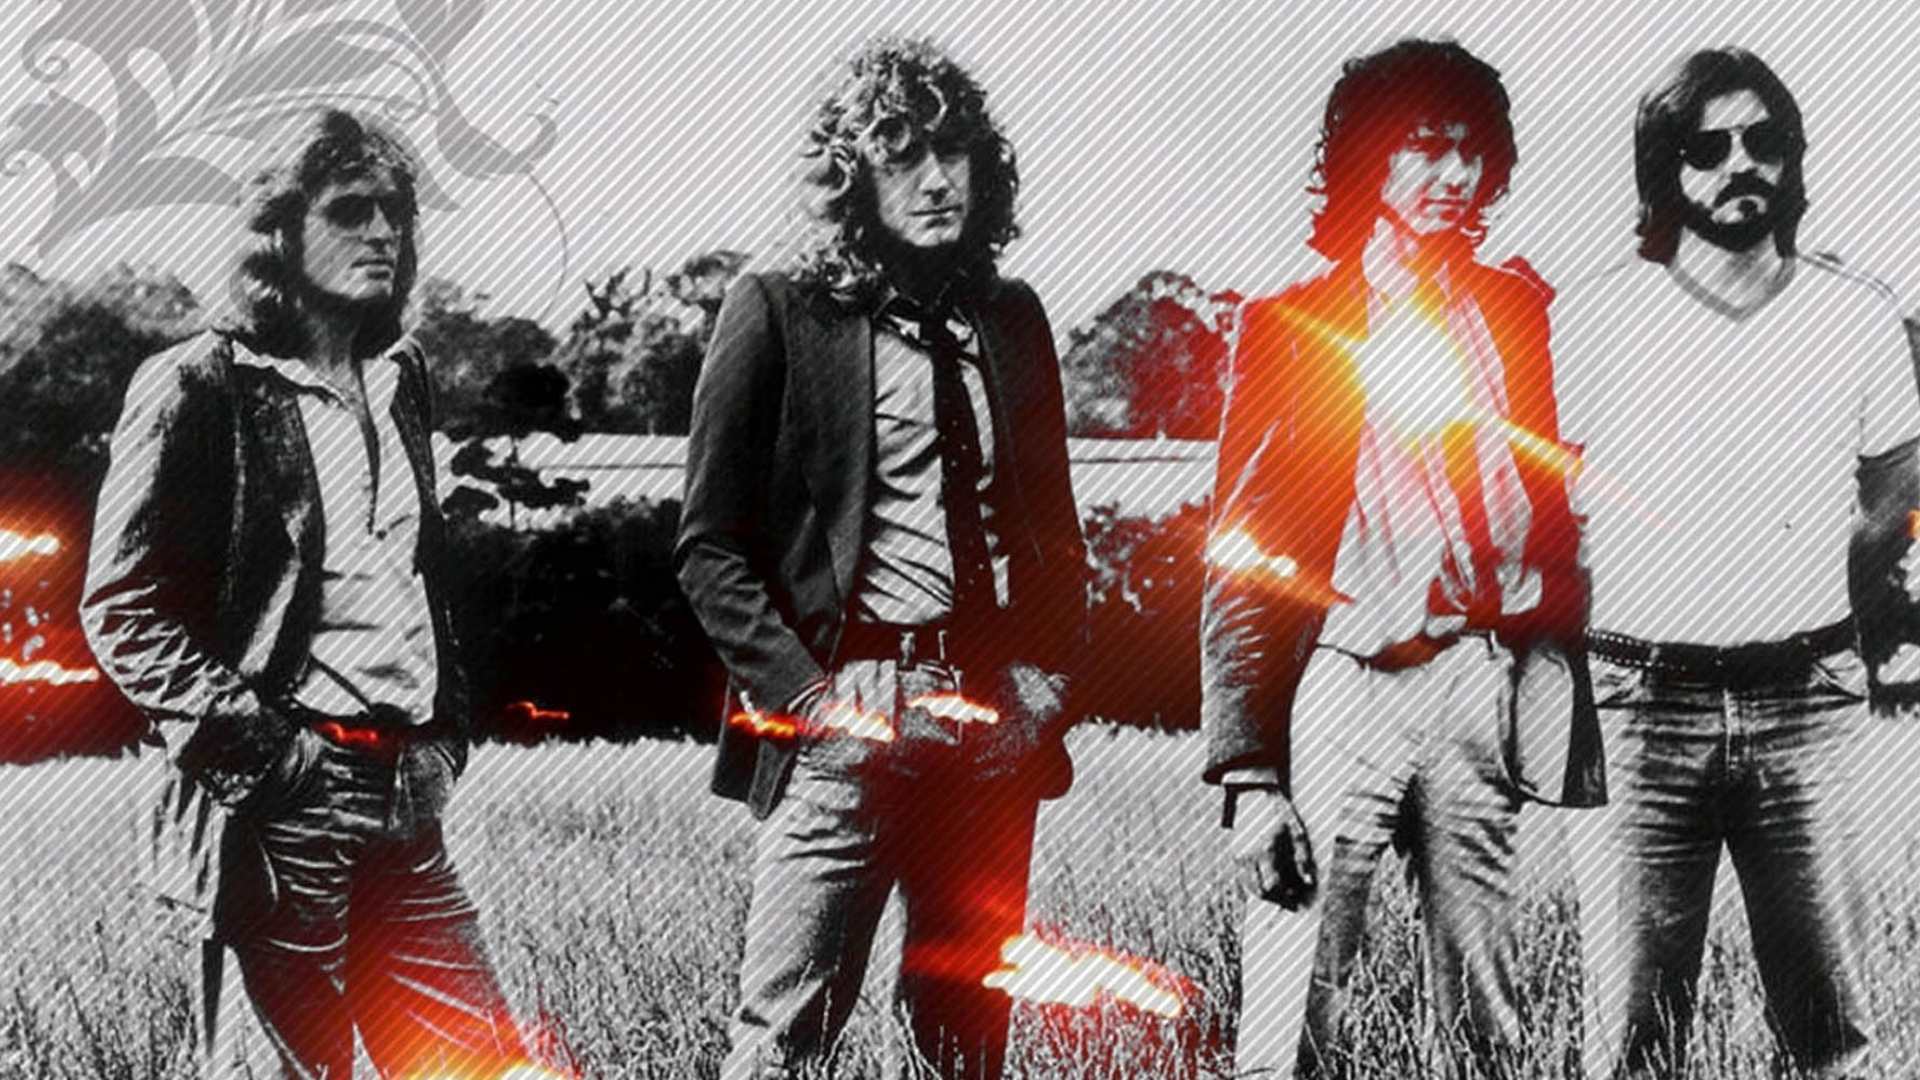 Led Zeppelin HD Wallpapers for desktop download